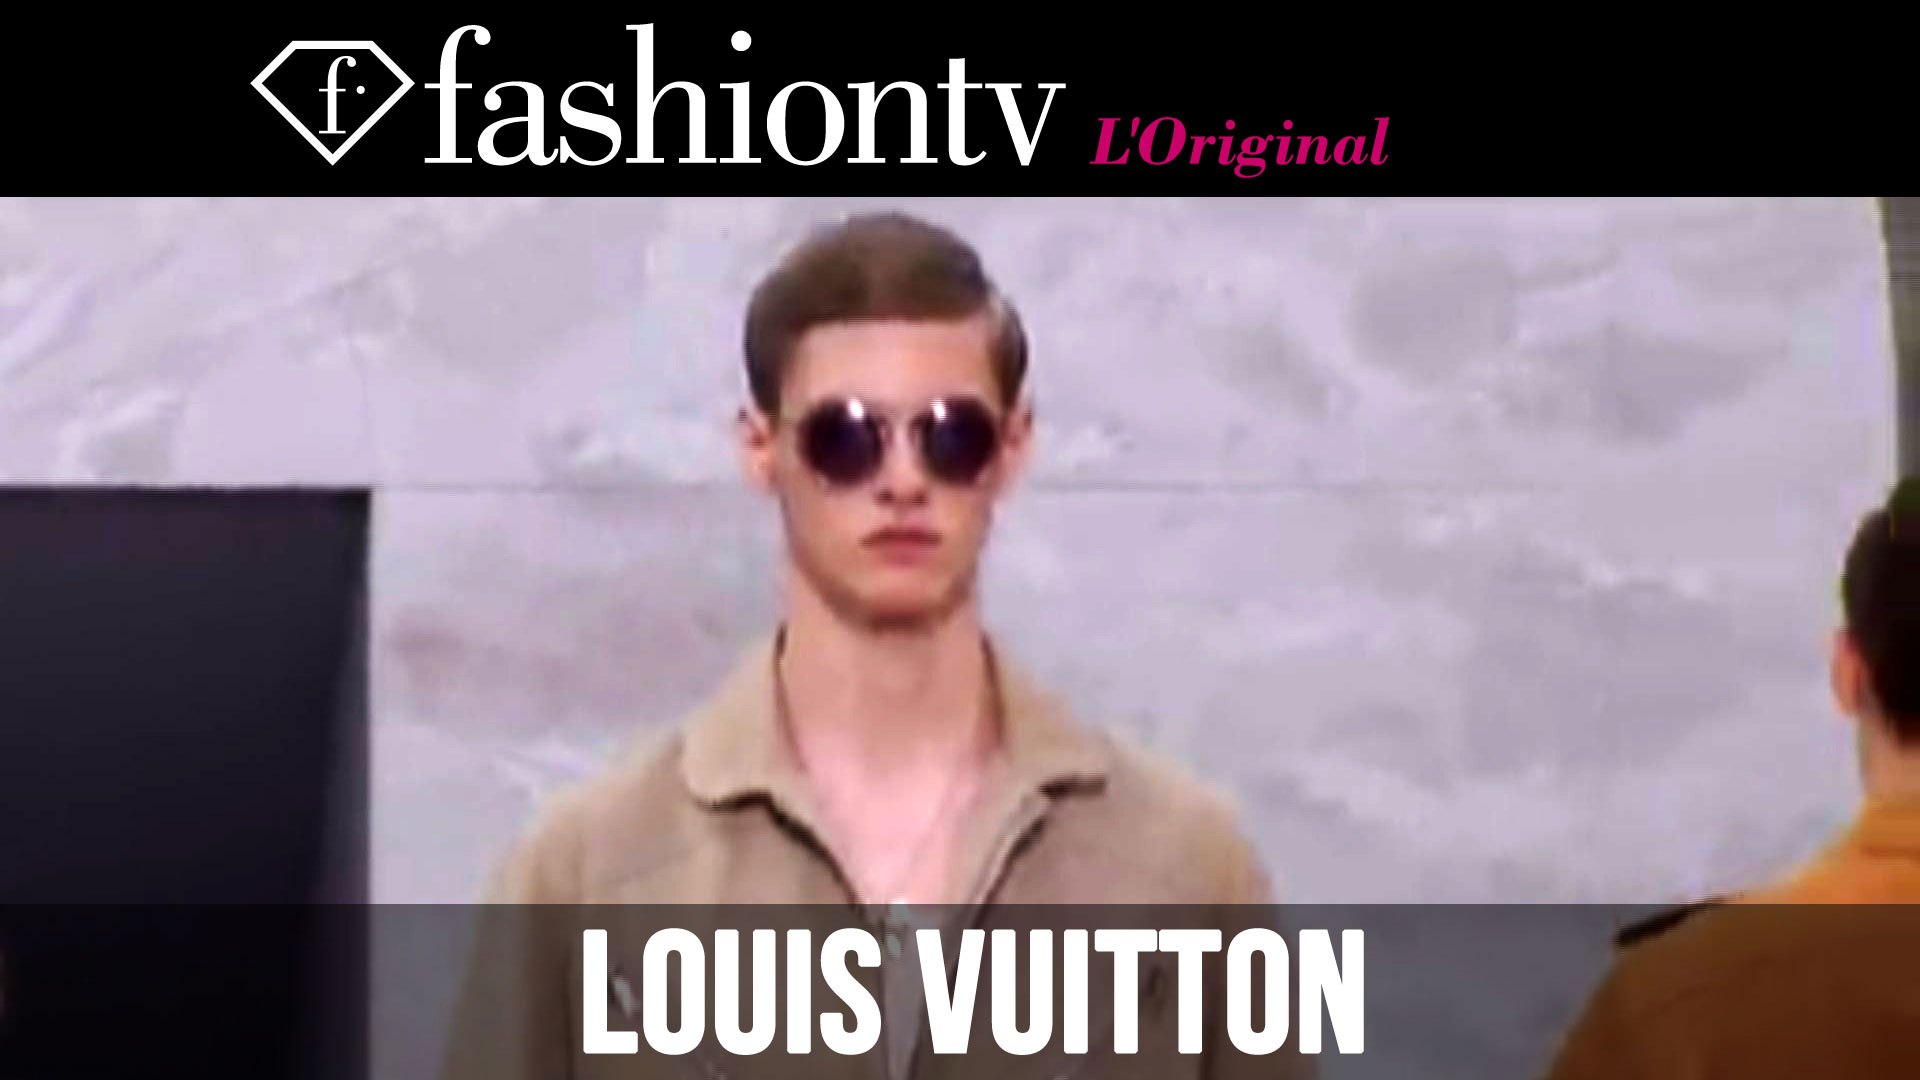 Louis Vuitton - The Louis Vuitton Men's Spring/Summer 2015 Fashion Show  from Men's Style Director Kim Jones is live now on www.louisvuitton.com. ©M  Dortomb